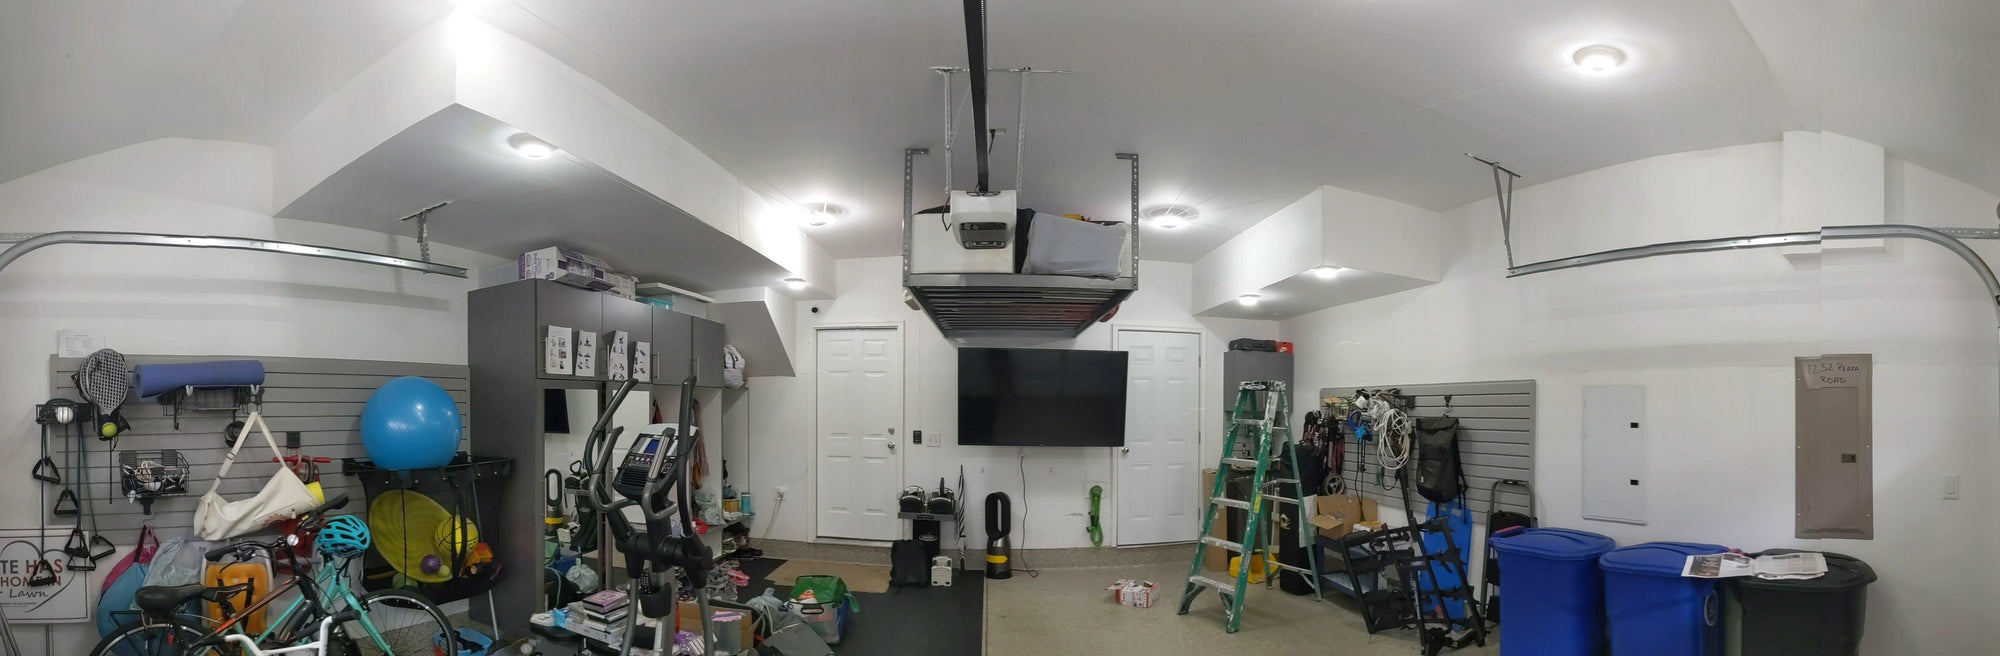 MPI Full Garage Lighting System: A Complete Overview STKR Concepts